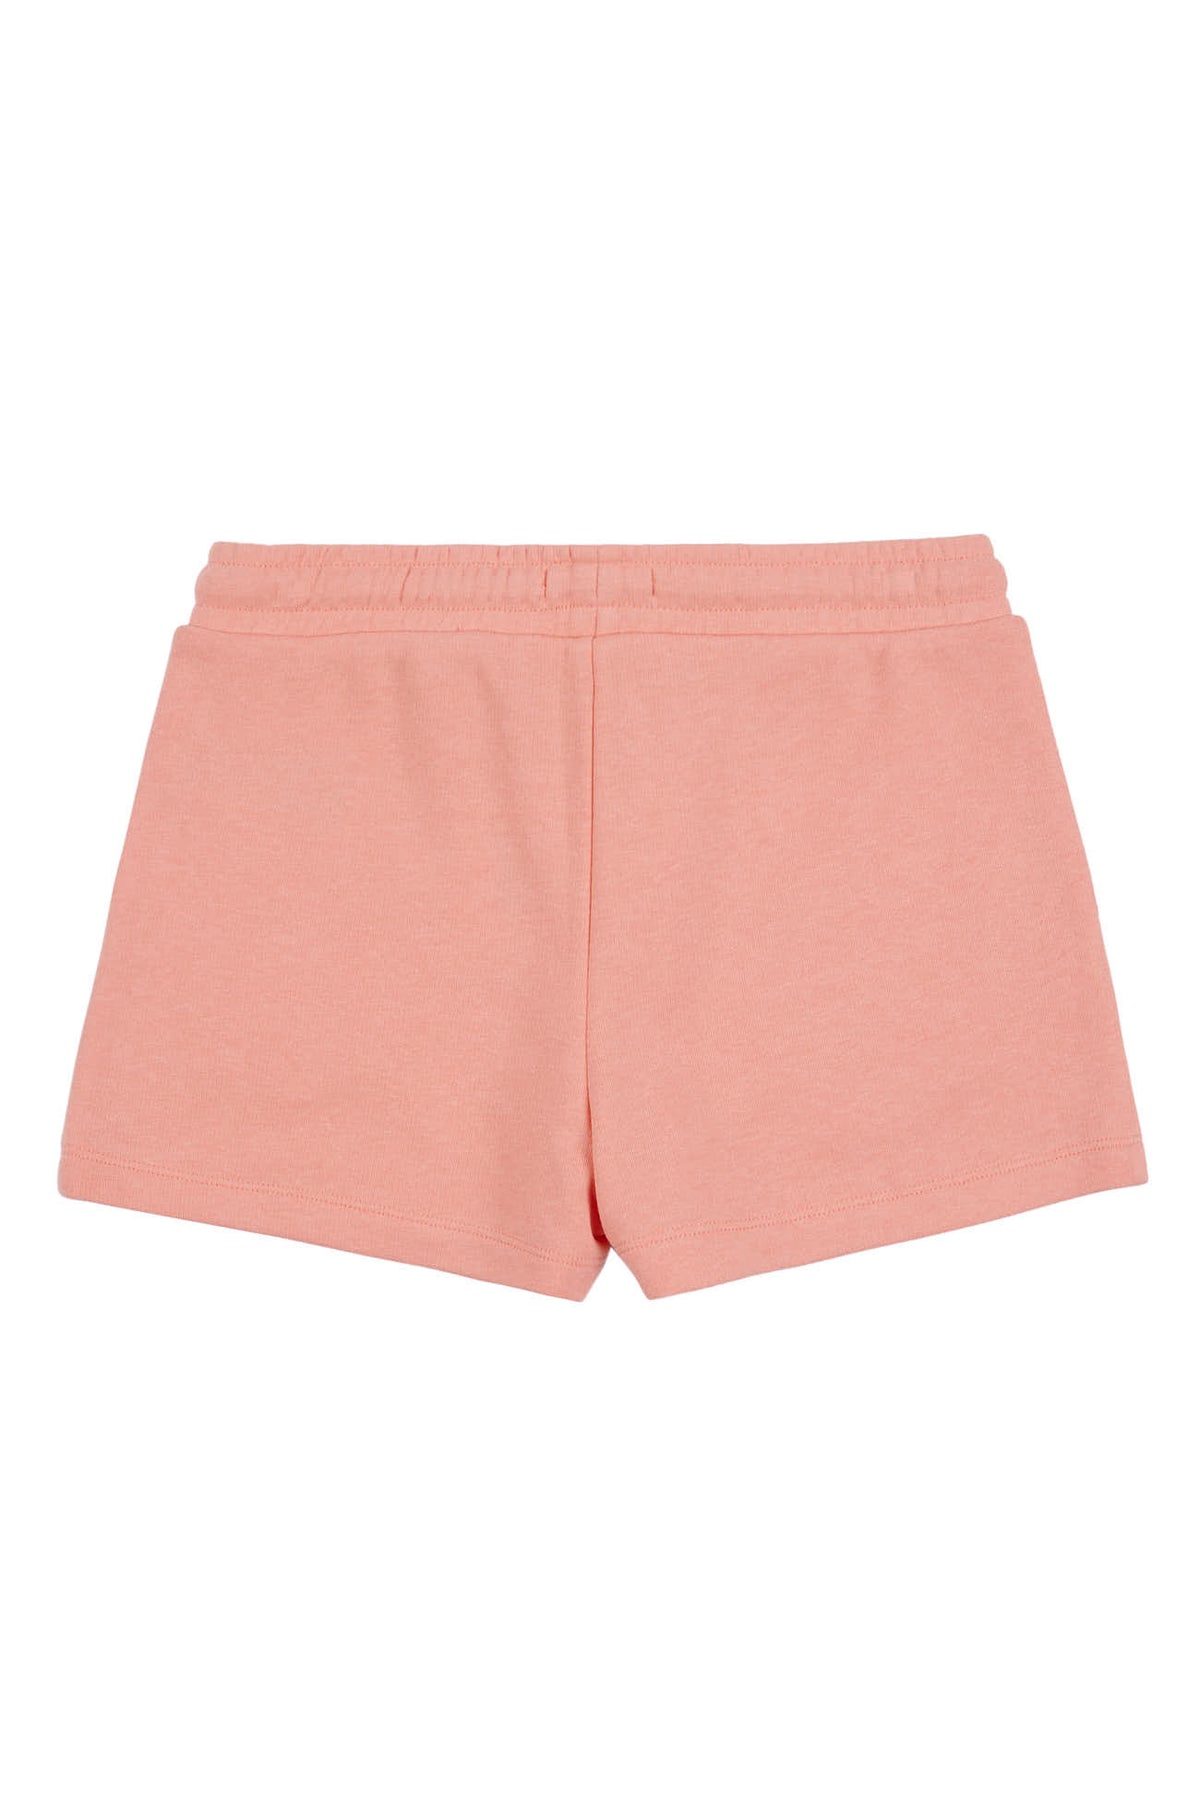 Girls Shorts in Peach Amber